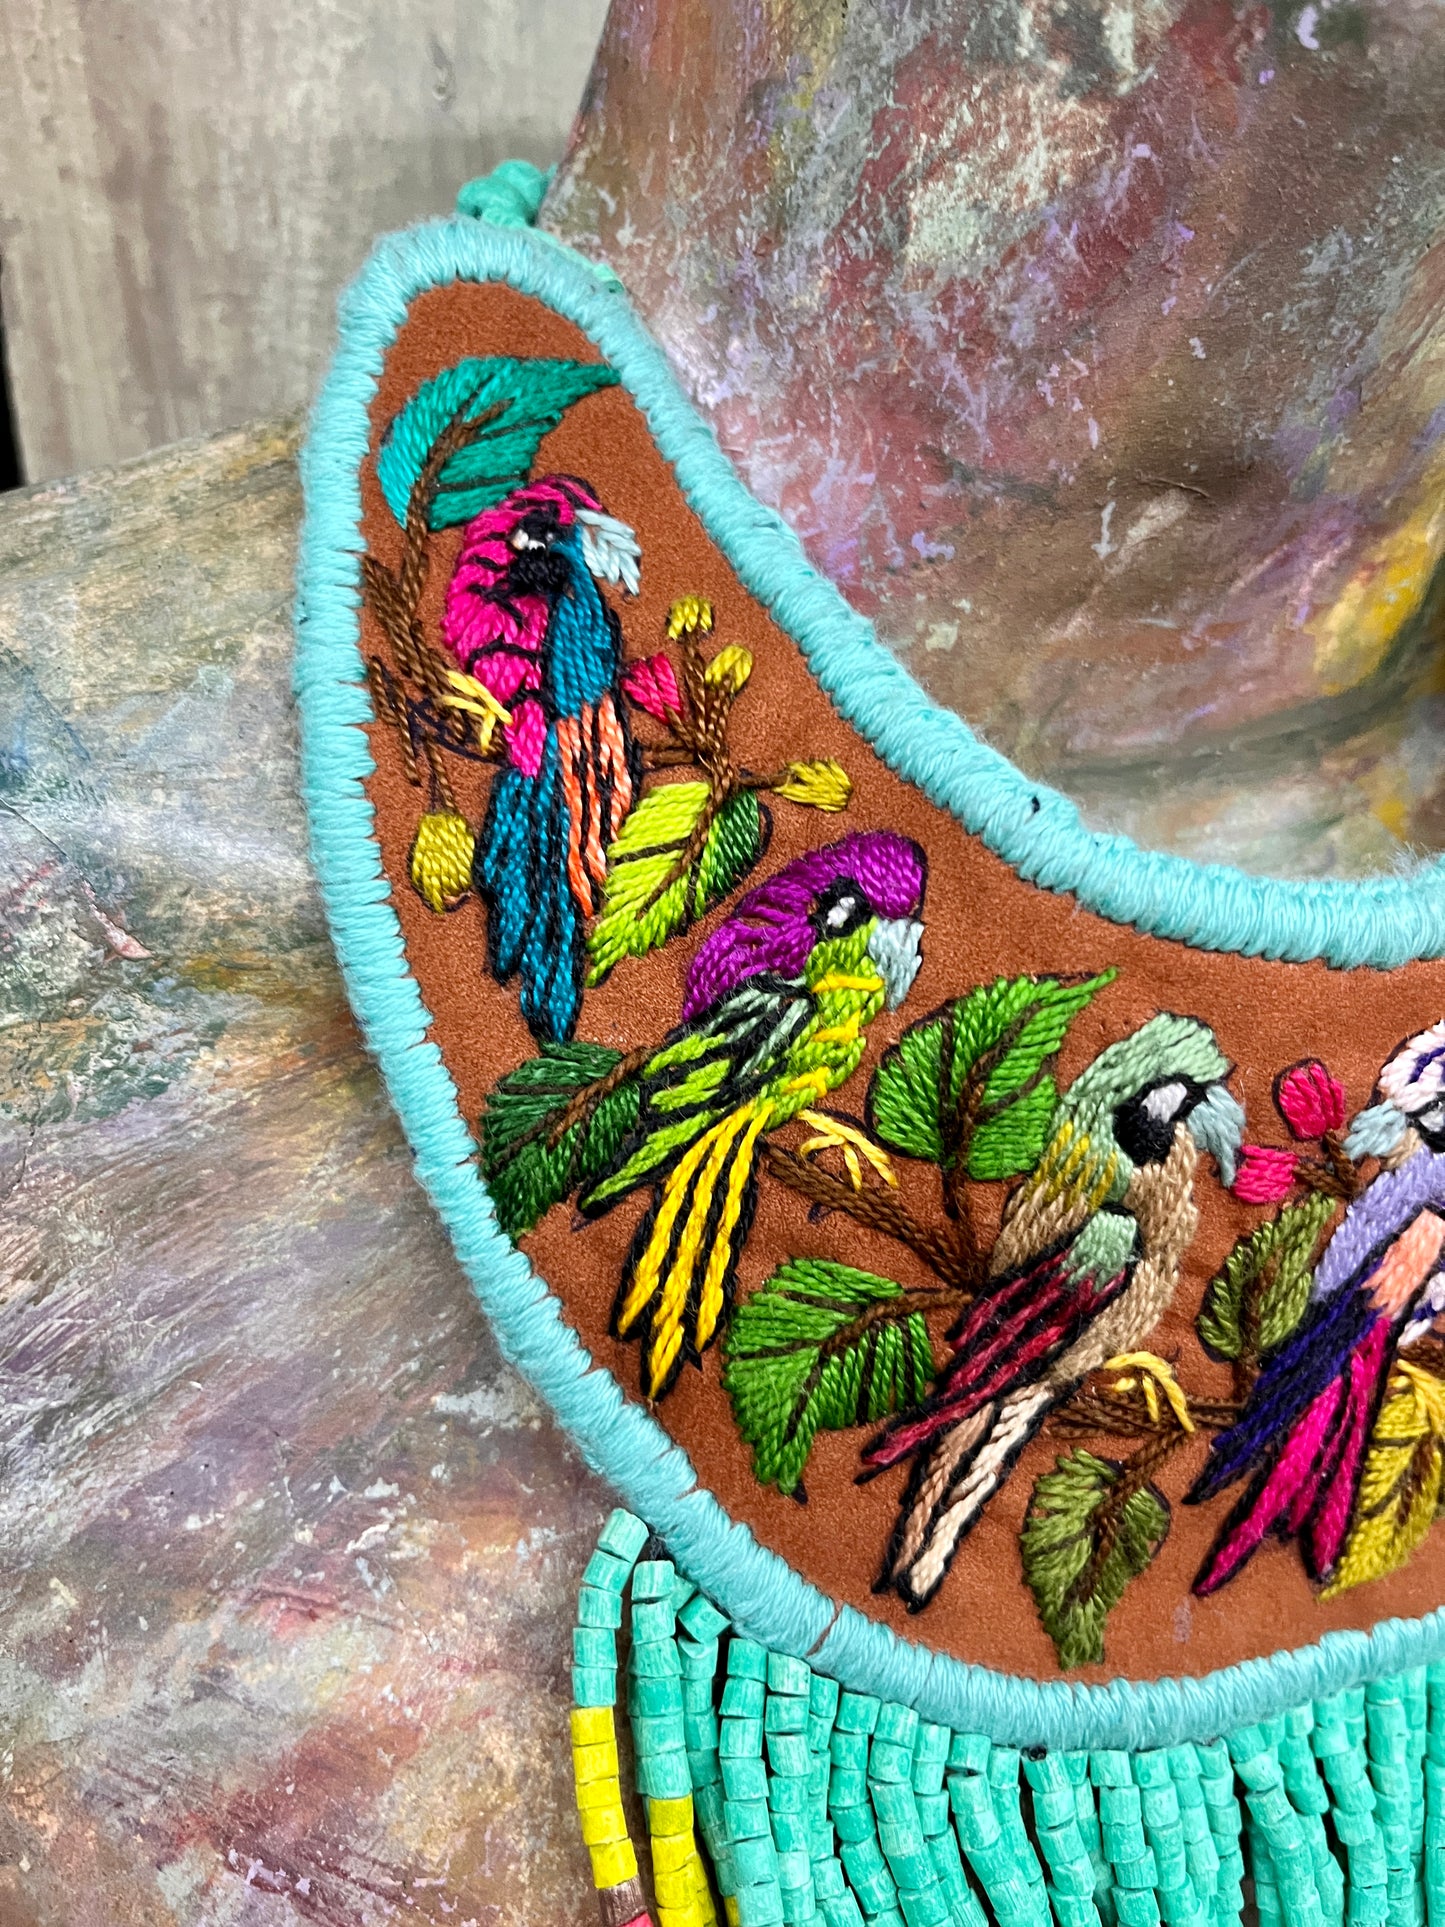 Embroidered Bib Collars with Fringes, Adjustable - "Birds of Santiago"